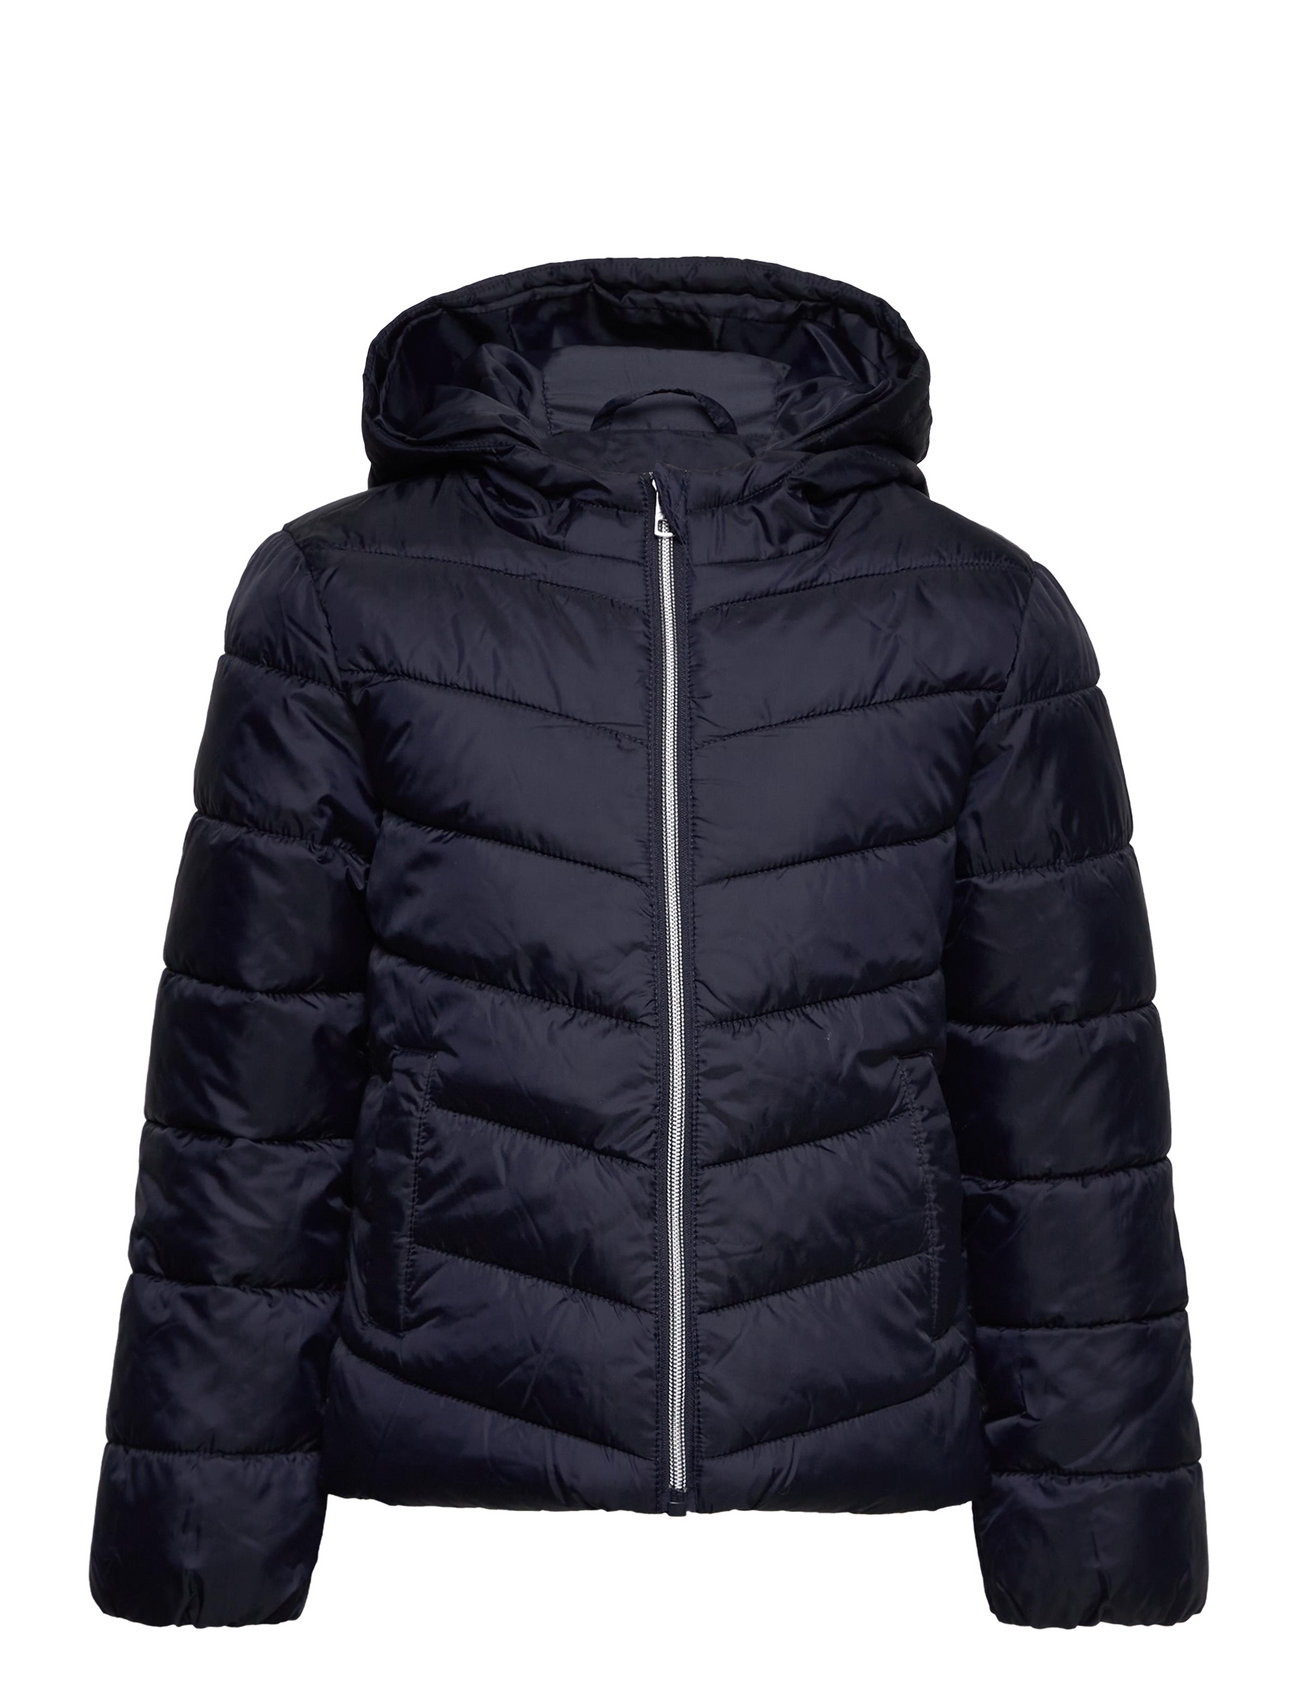 Kids Only jackets shop – – Booztlet Otw Hood at Jacket Quilted Kogtanea